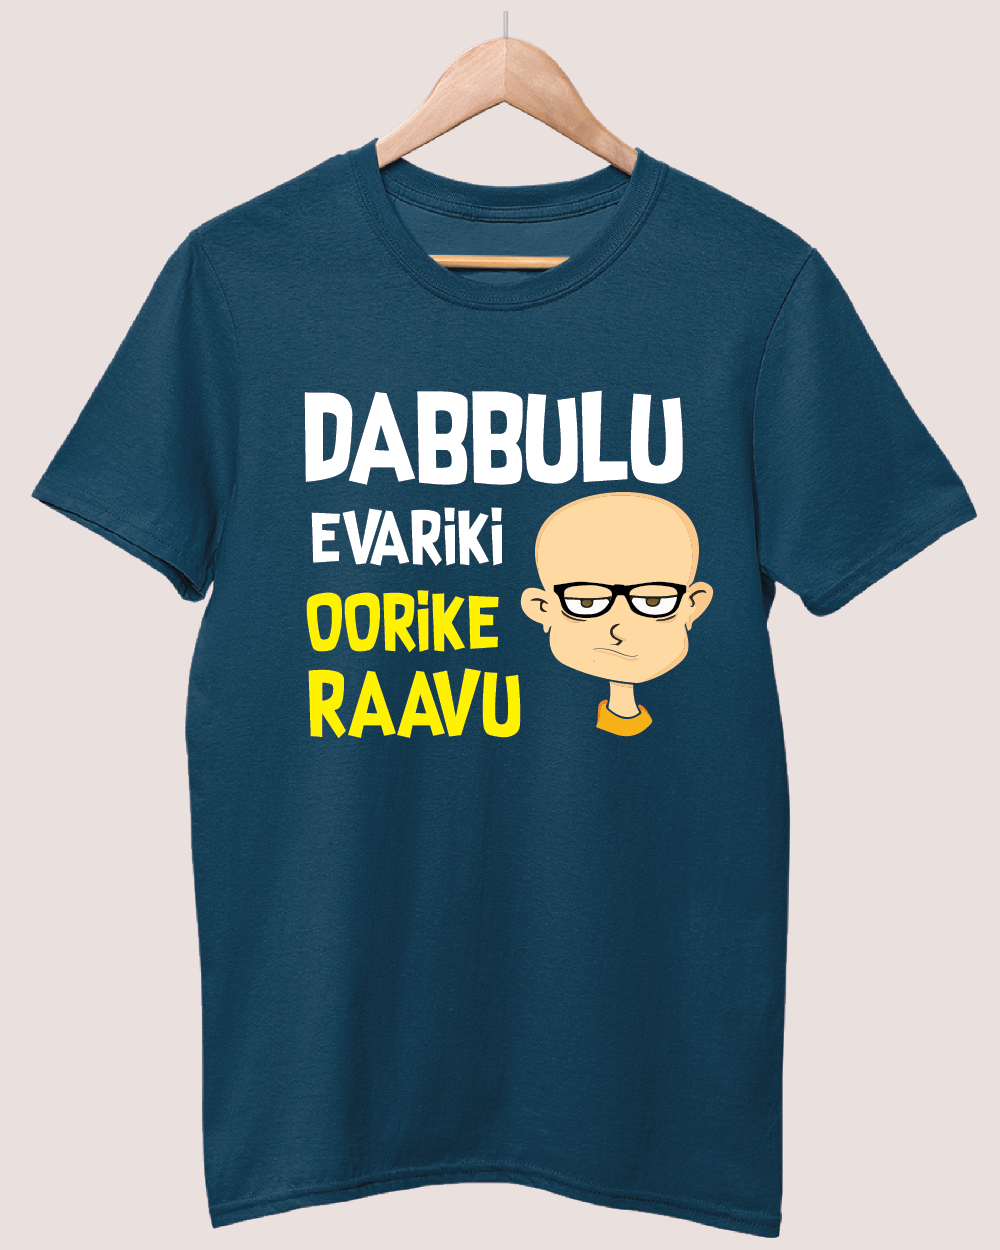 Dabbulu evariki oorike raavu T-shirt